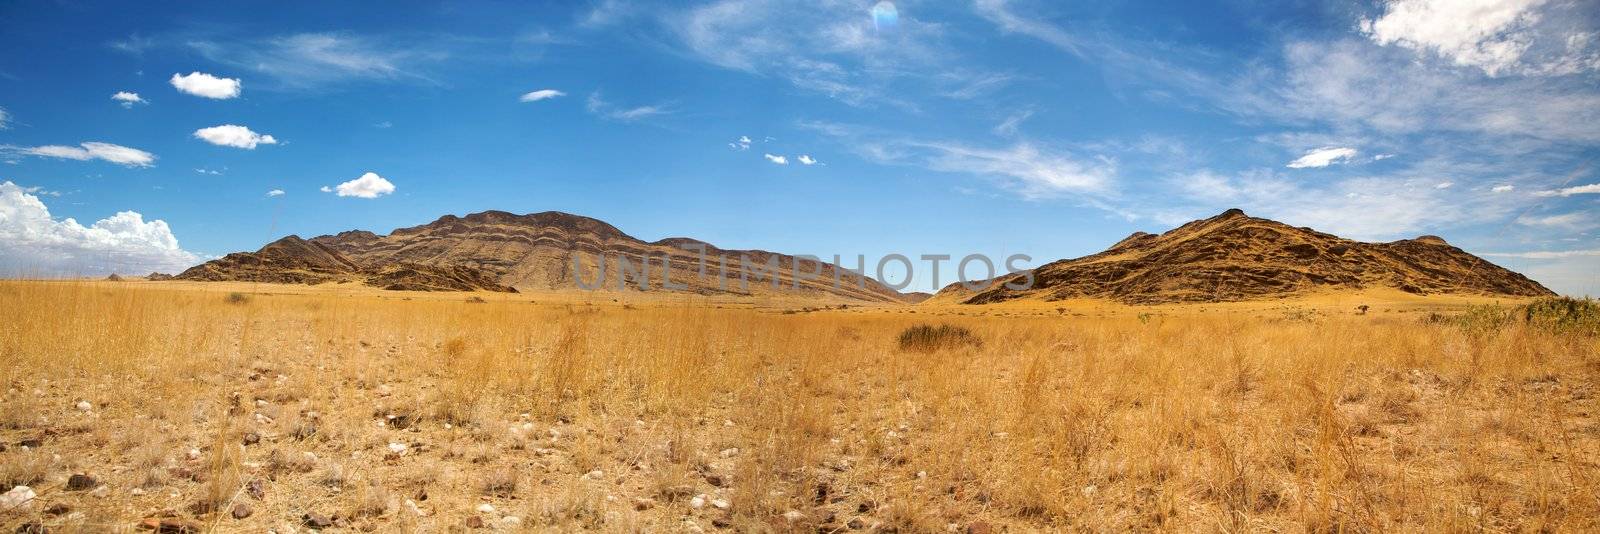 Namib Desert  by watchtheworld